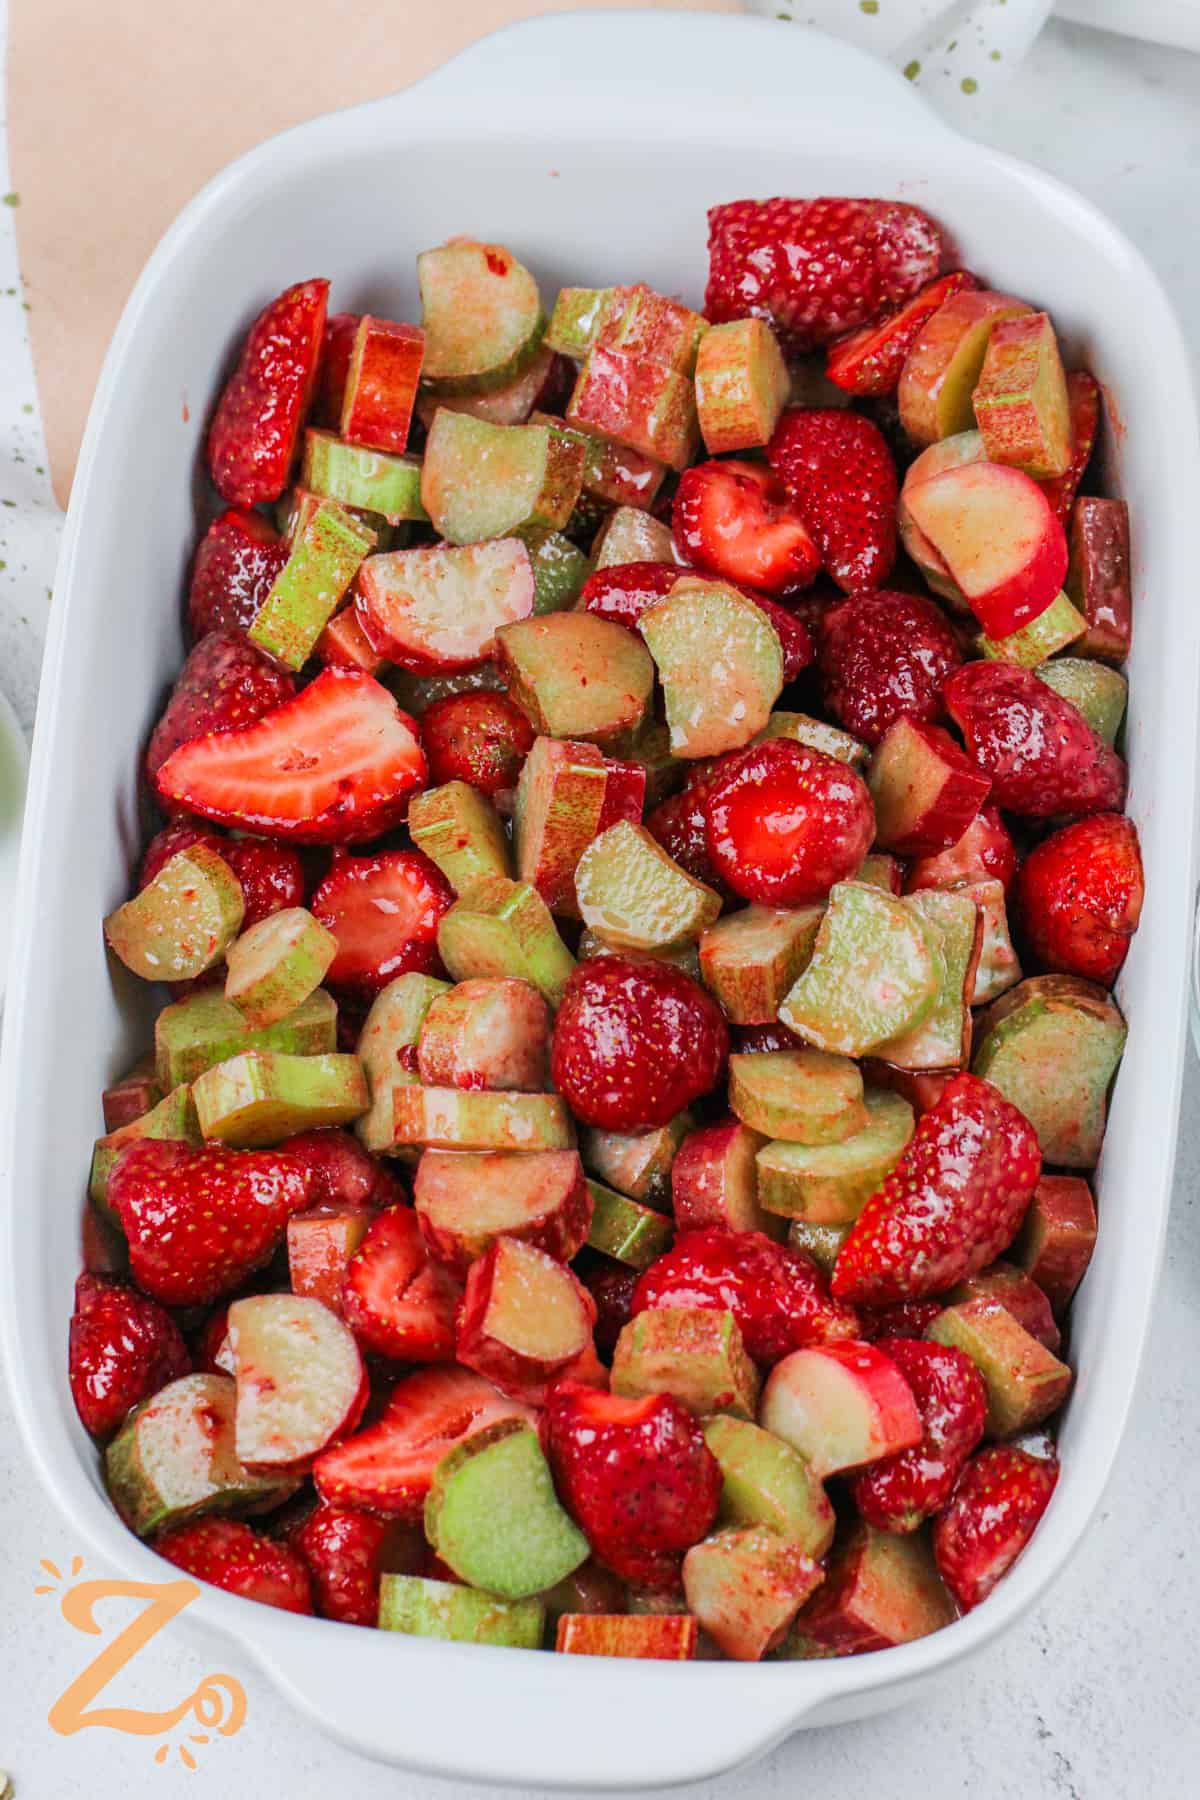 adding strawberry and rhubarb to the dish to make Strawberry Rhubarb Crisp